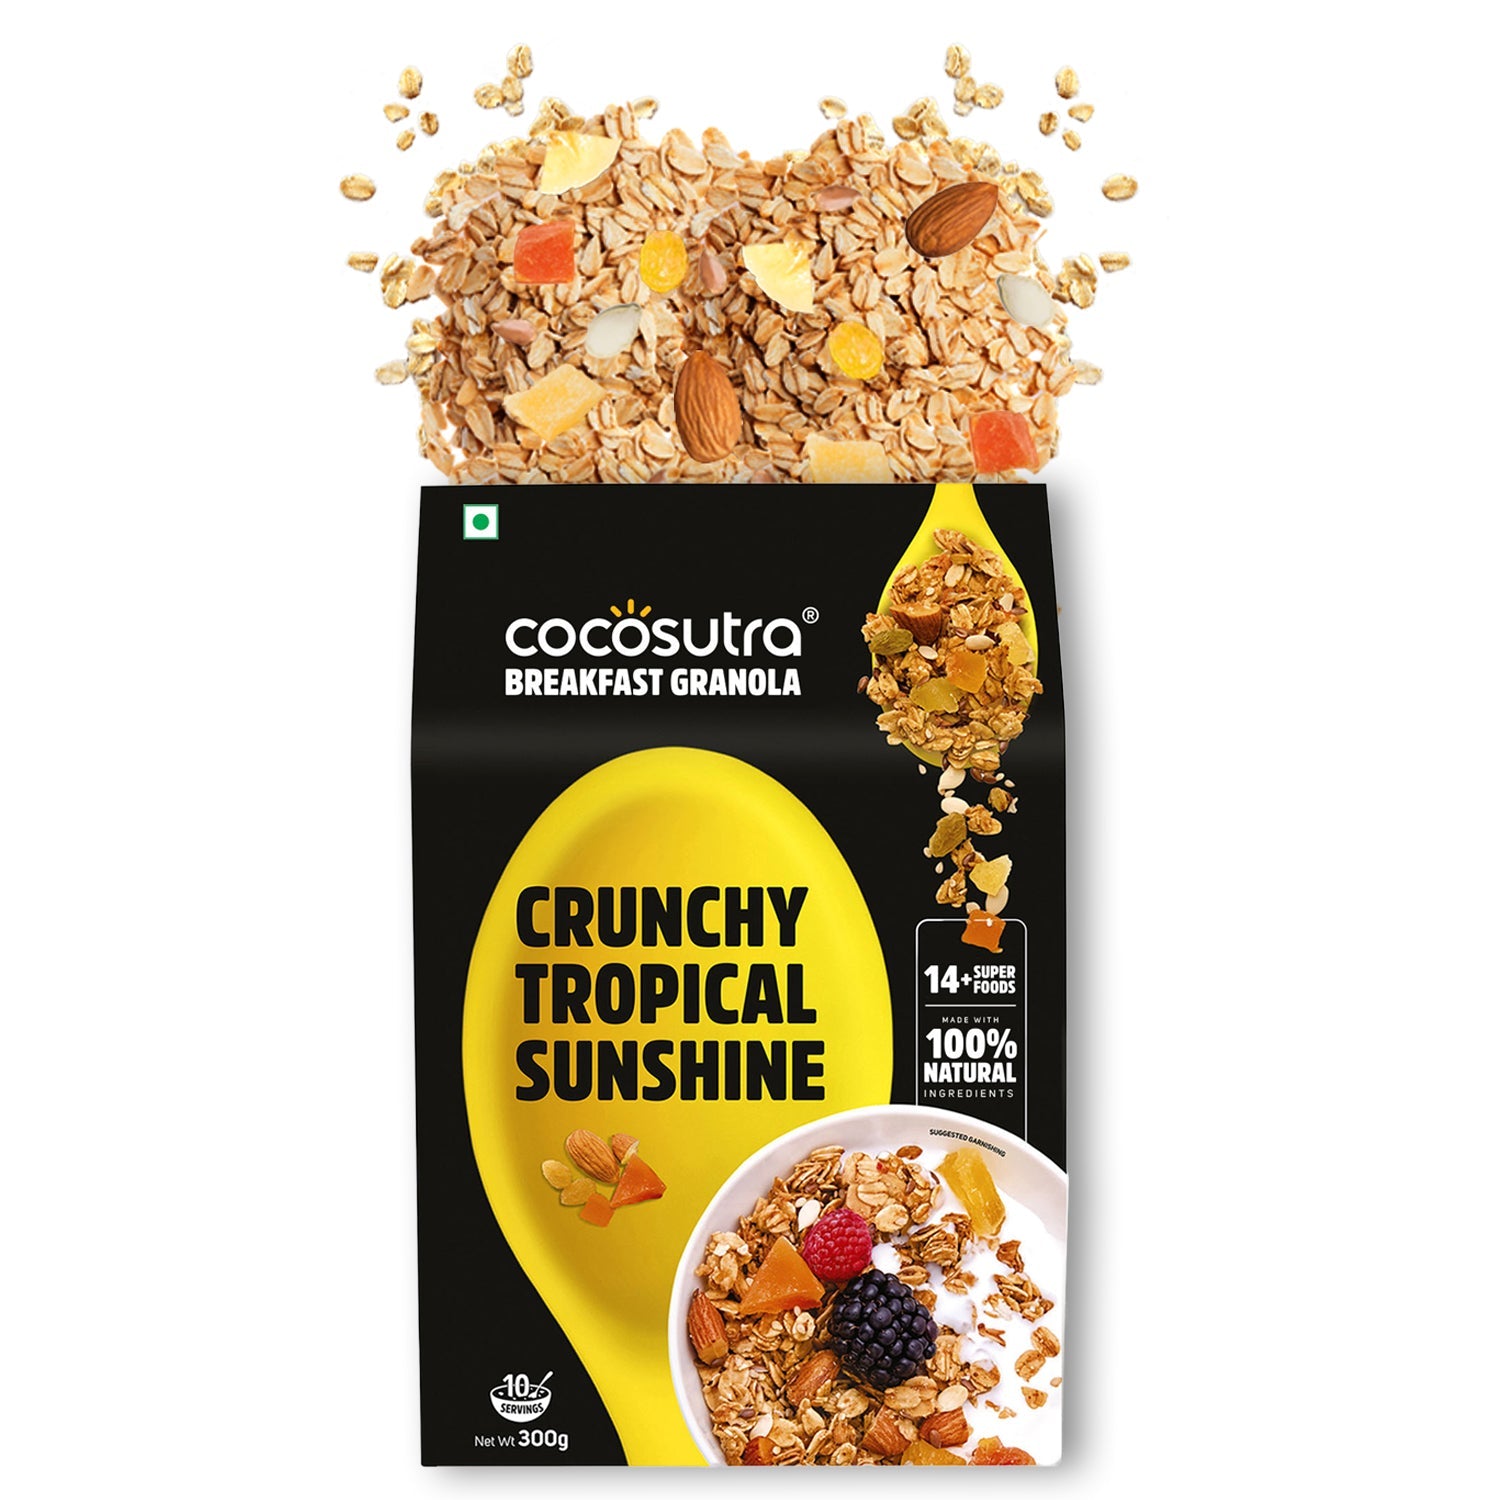 Crunchy Tropical Sunshine Breakfast Granola | Box of 2 | 300 g each